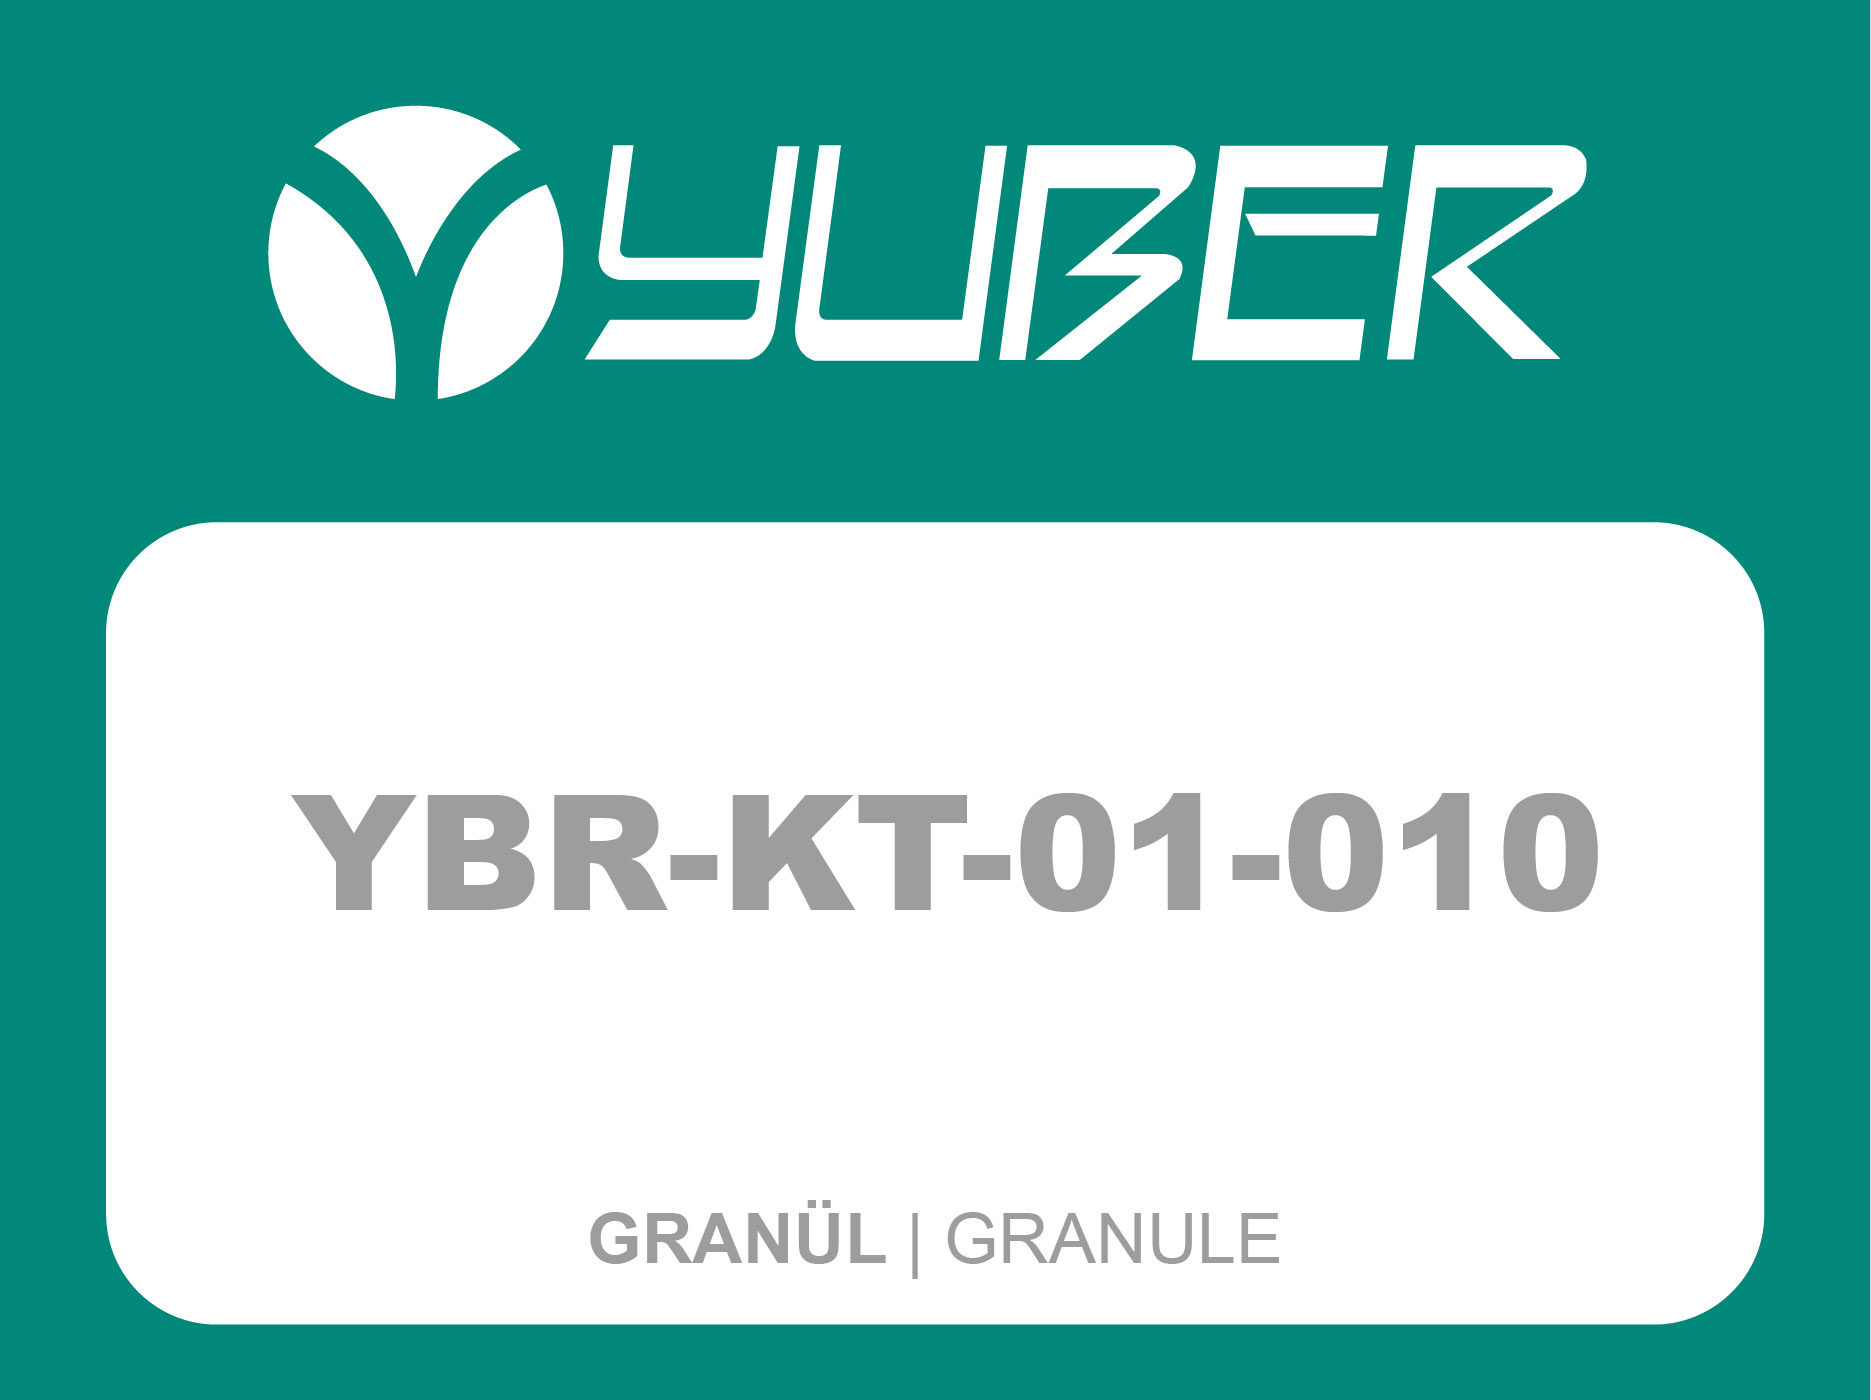 YBR KT 01 010 Granule Yuber Metallurgy